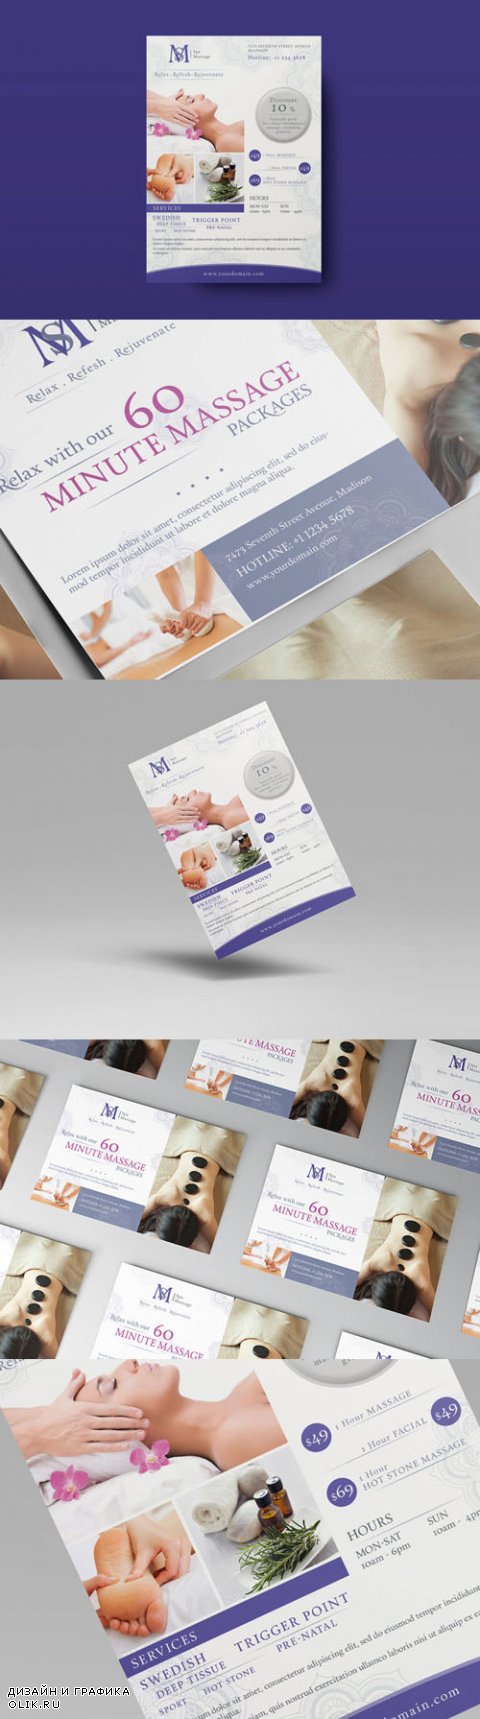 PSD Massage - Ad & Flyer Template